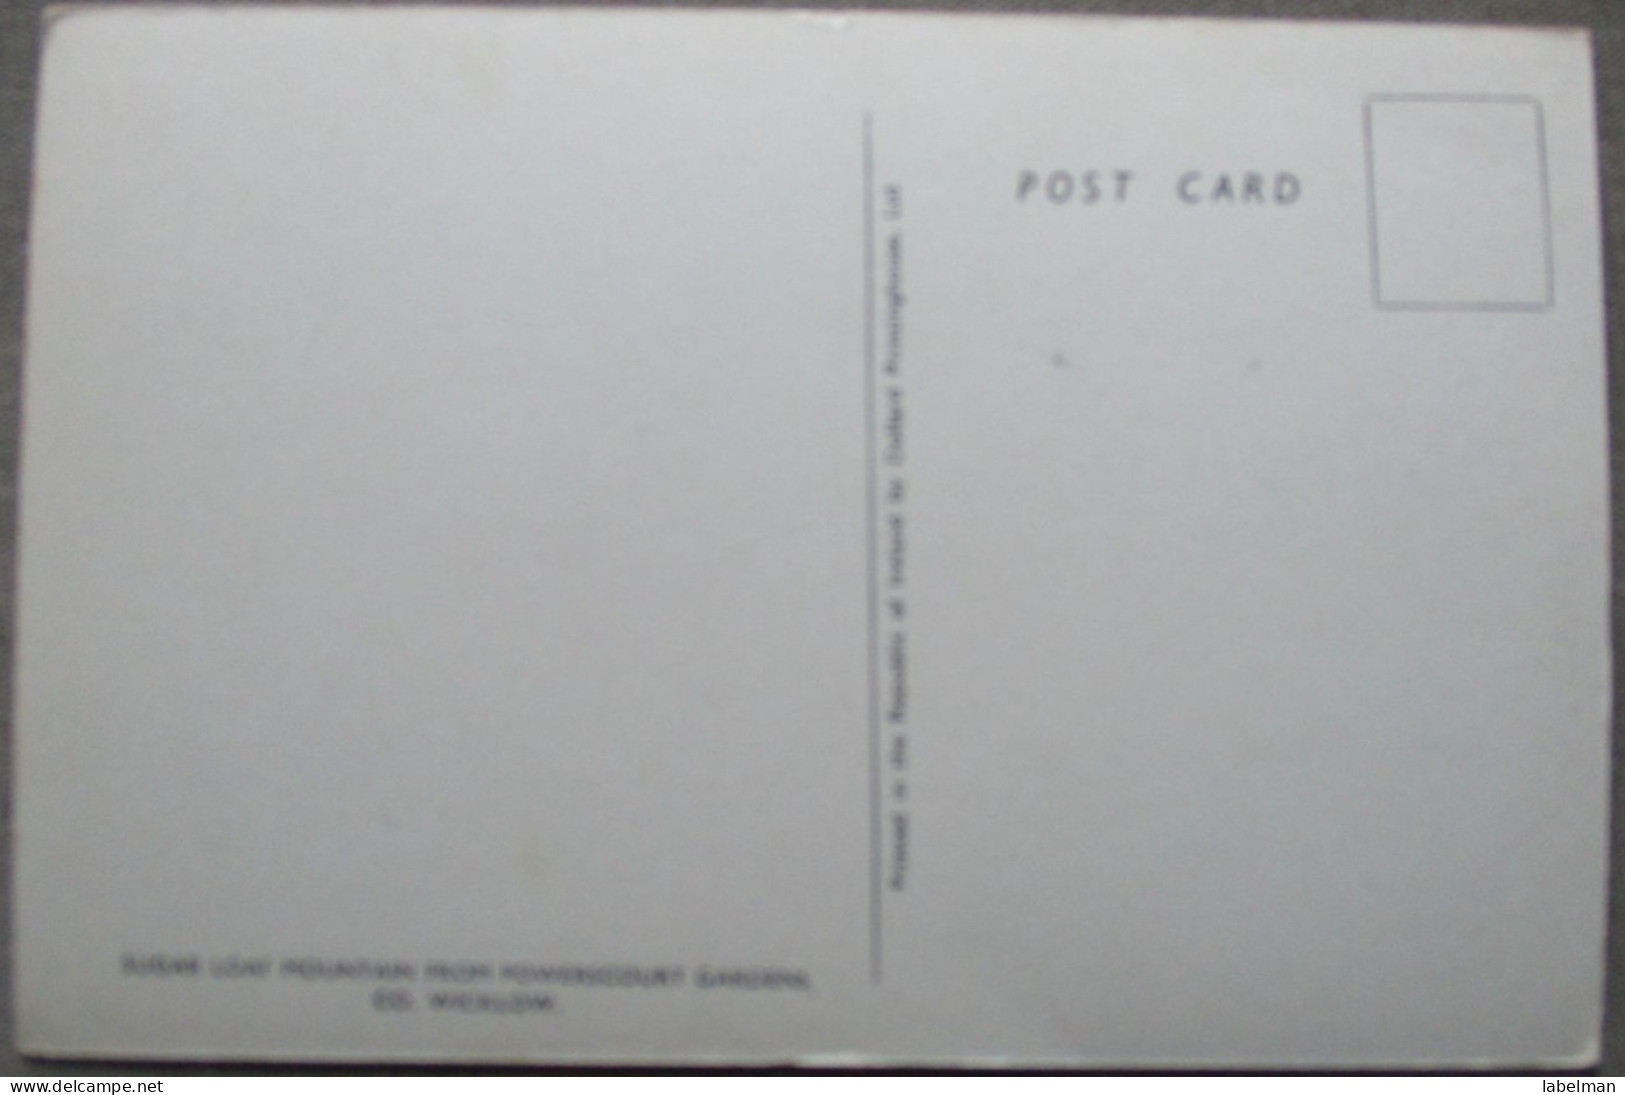 IRLAND UK UNITED KINGDOM WICKLOW SUGAR LOAF MT KARTE CARD POSTKARTE POSTCARD ANSICHTSKARTE CARTOLINA CARTE POSTALE - Sammlungen & Sammellose